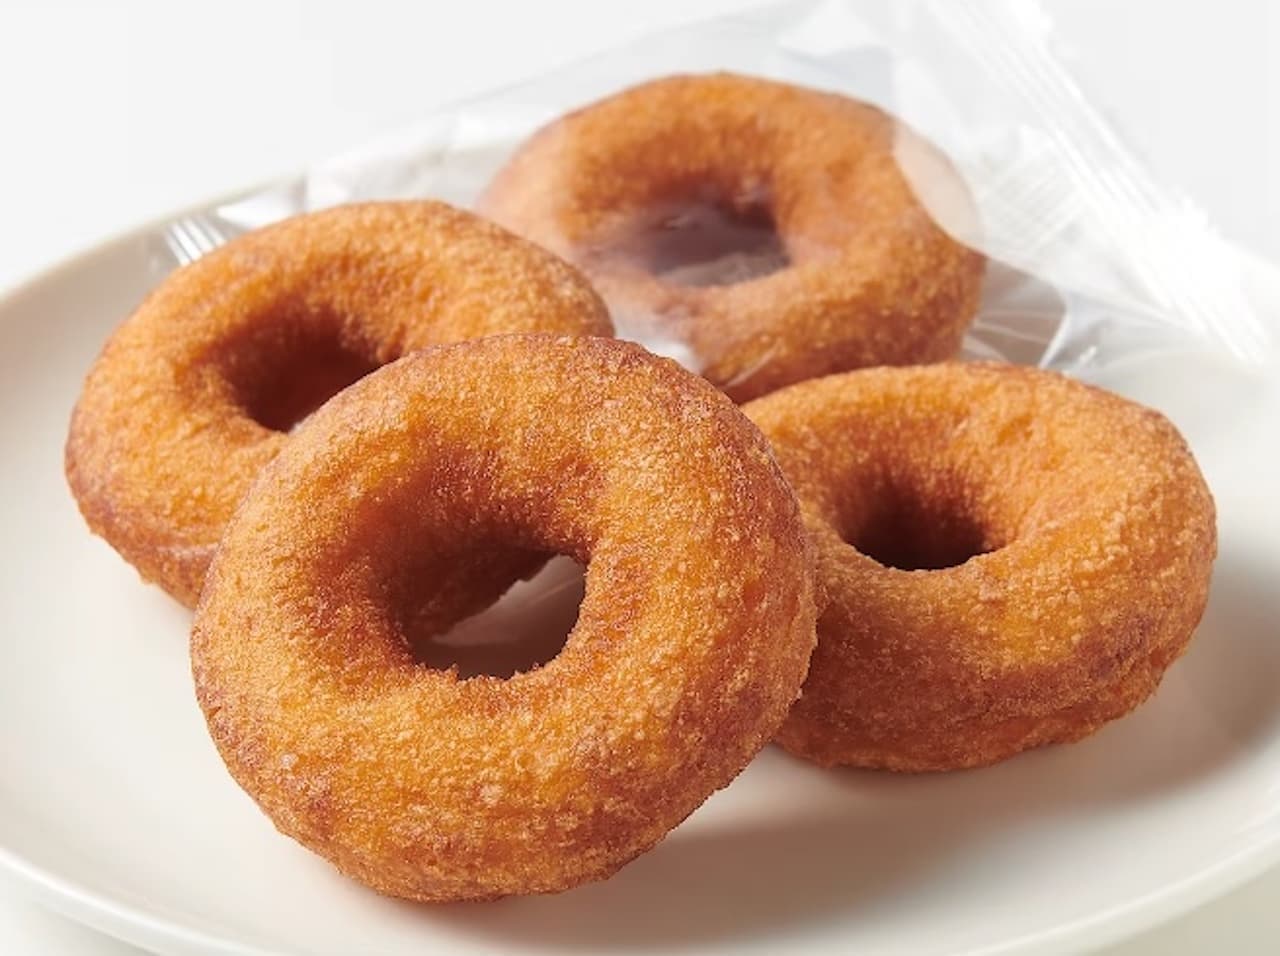 MUJI "Anno sweet potato donuts